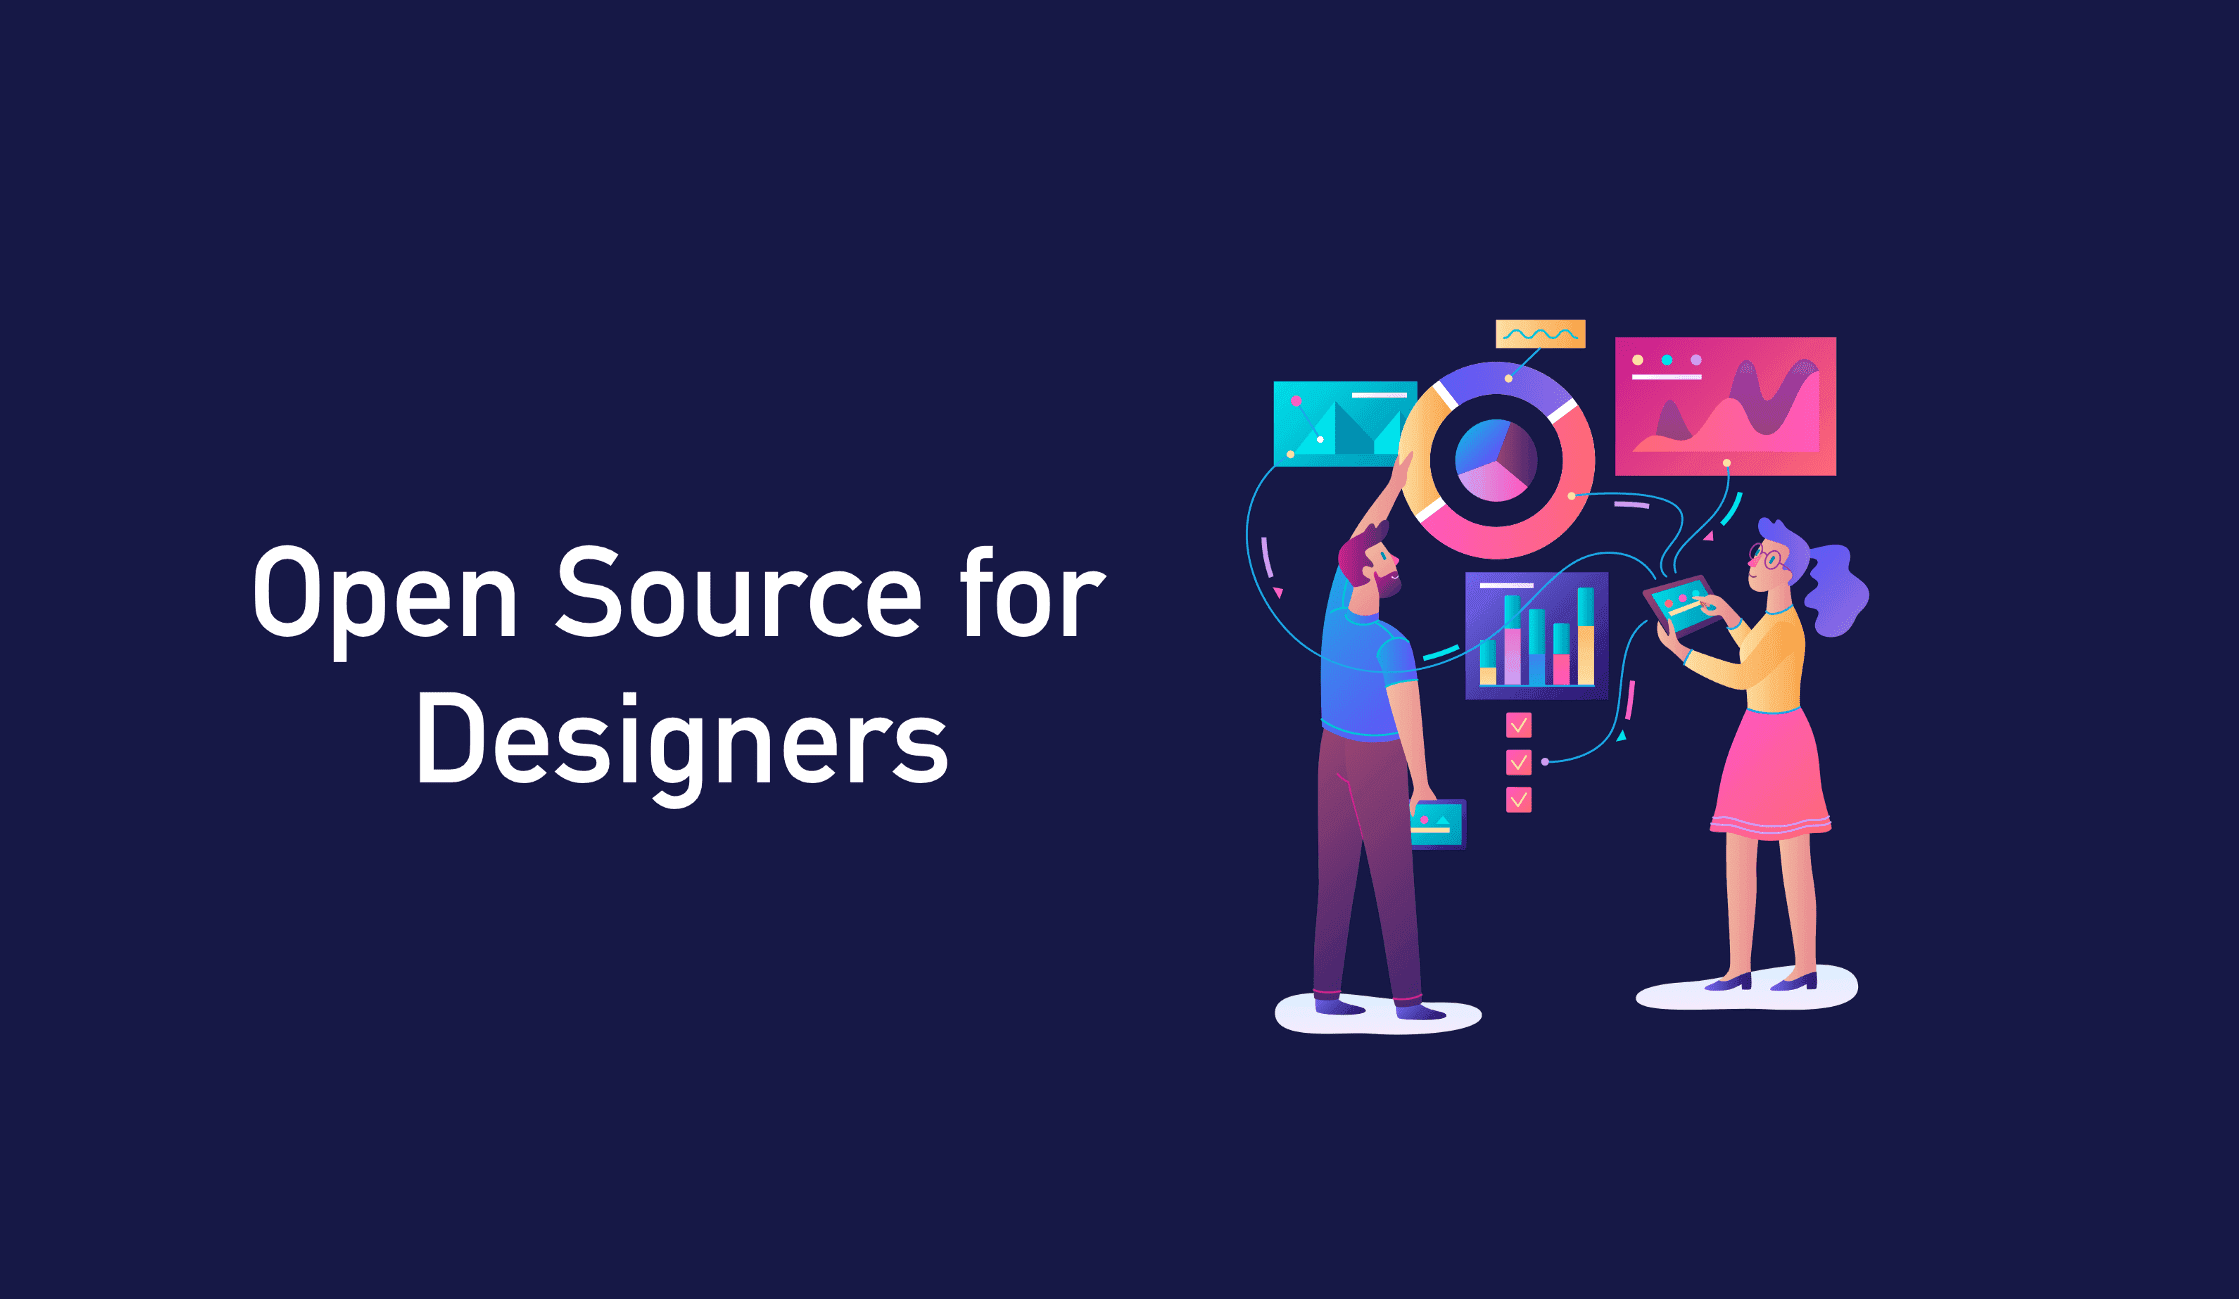 Dear designers, please contribute to open source